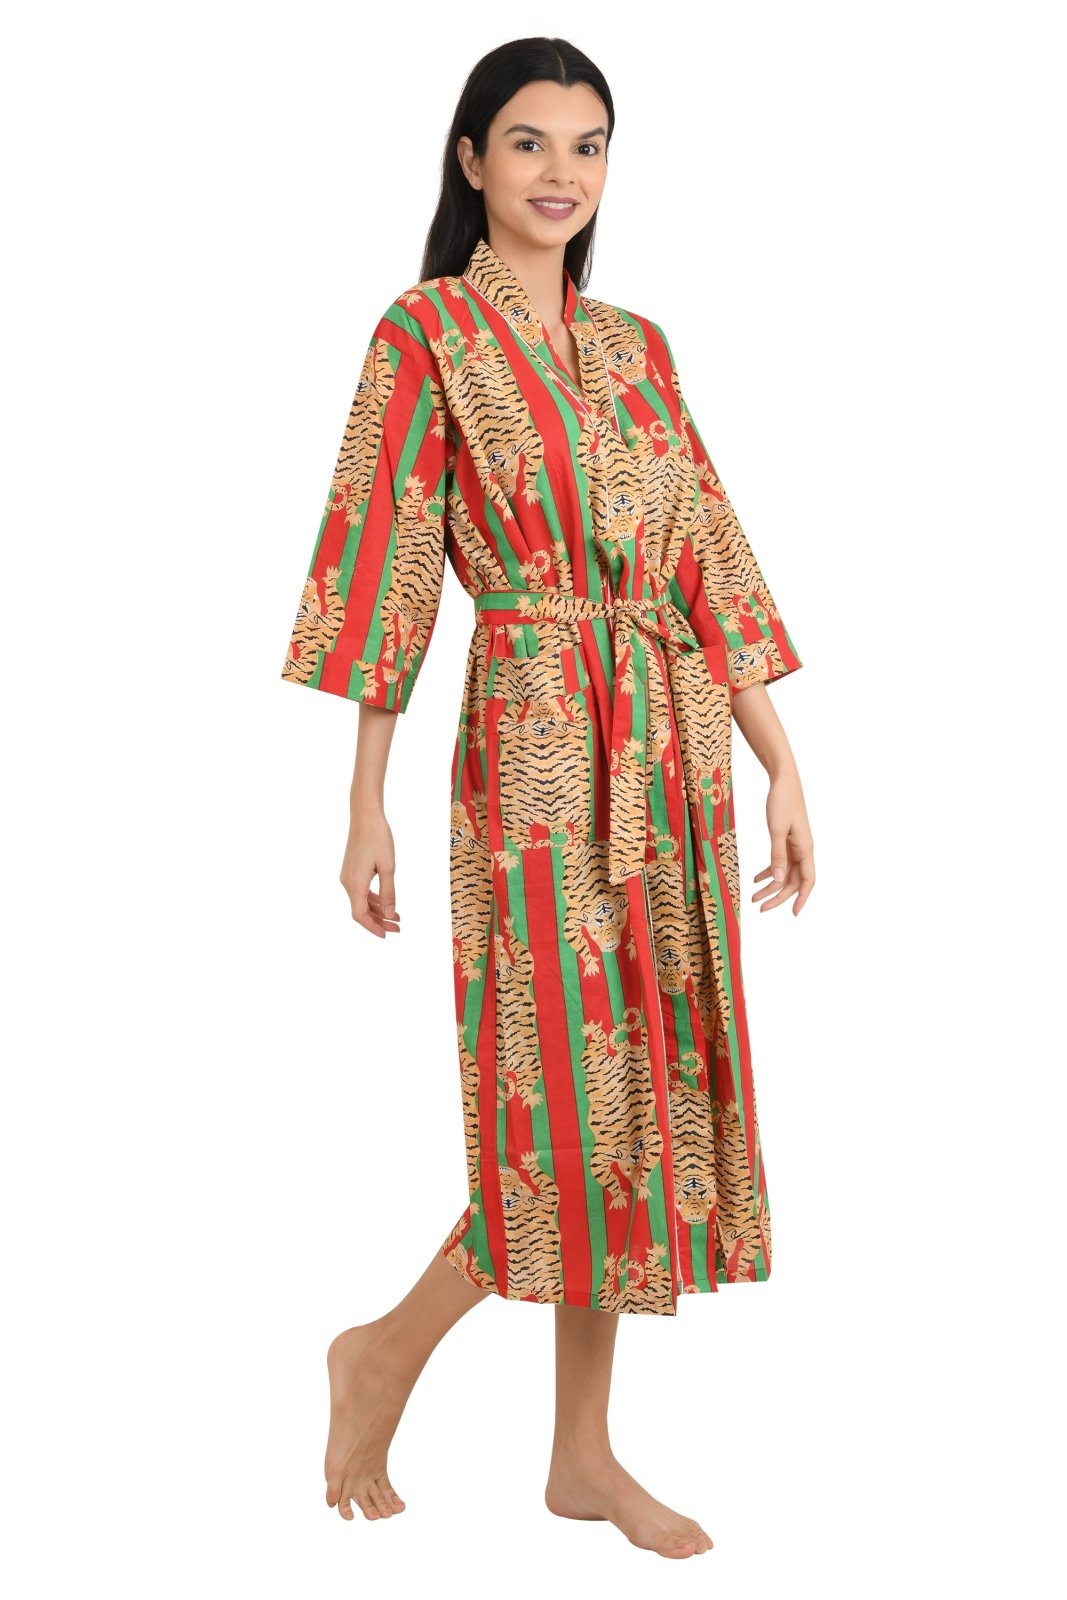 Kimono House Robe Indian Handprinted Strips Cheetah Print Pattern | Lightweight Summer Luxury Beach Holidays Yacht Cover Up Stunning Dress - The Eastern Loom